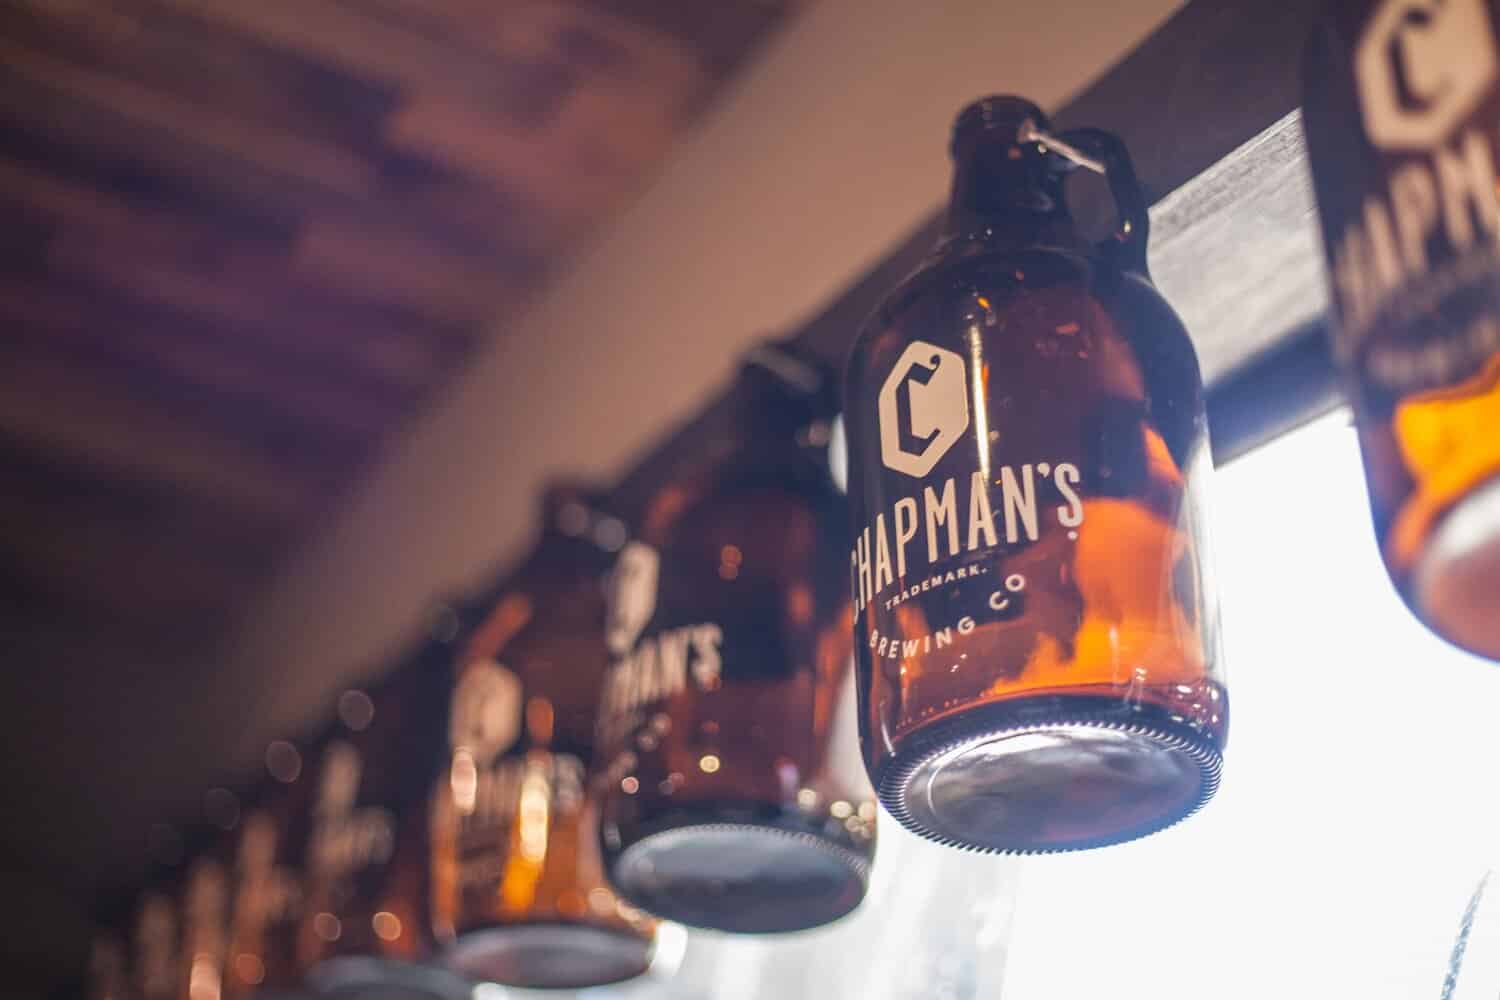 Chapman’s Brewing Company